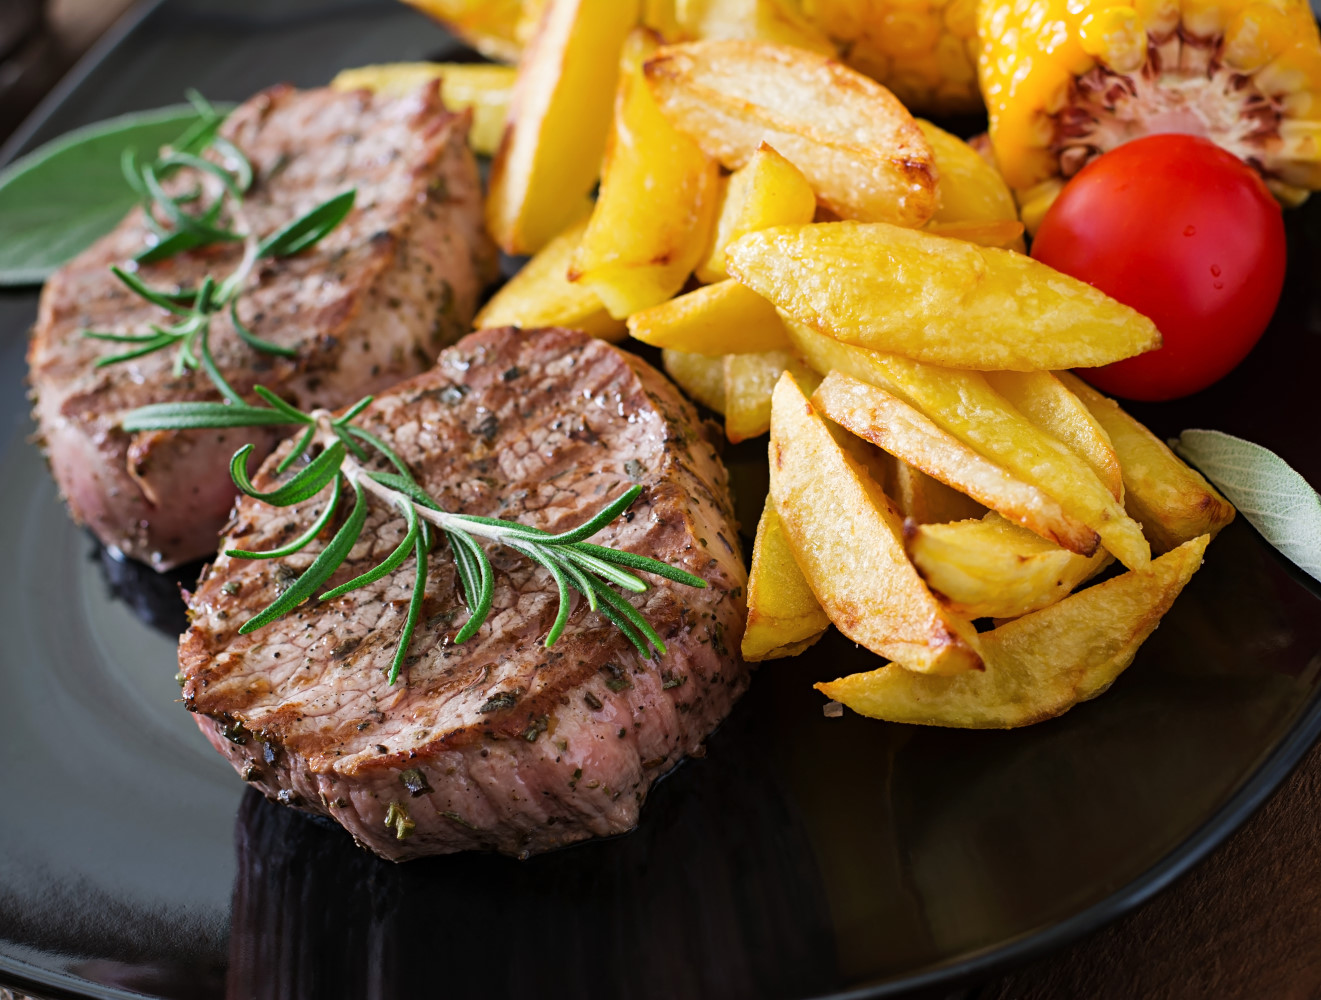 tender-juicy-veal-steak-medium-rare-with-french-fries